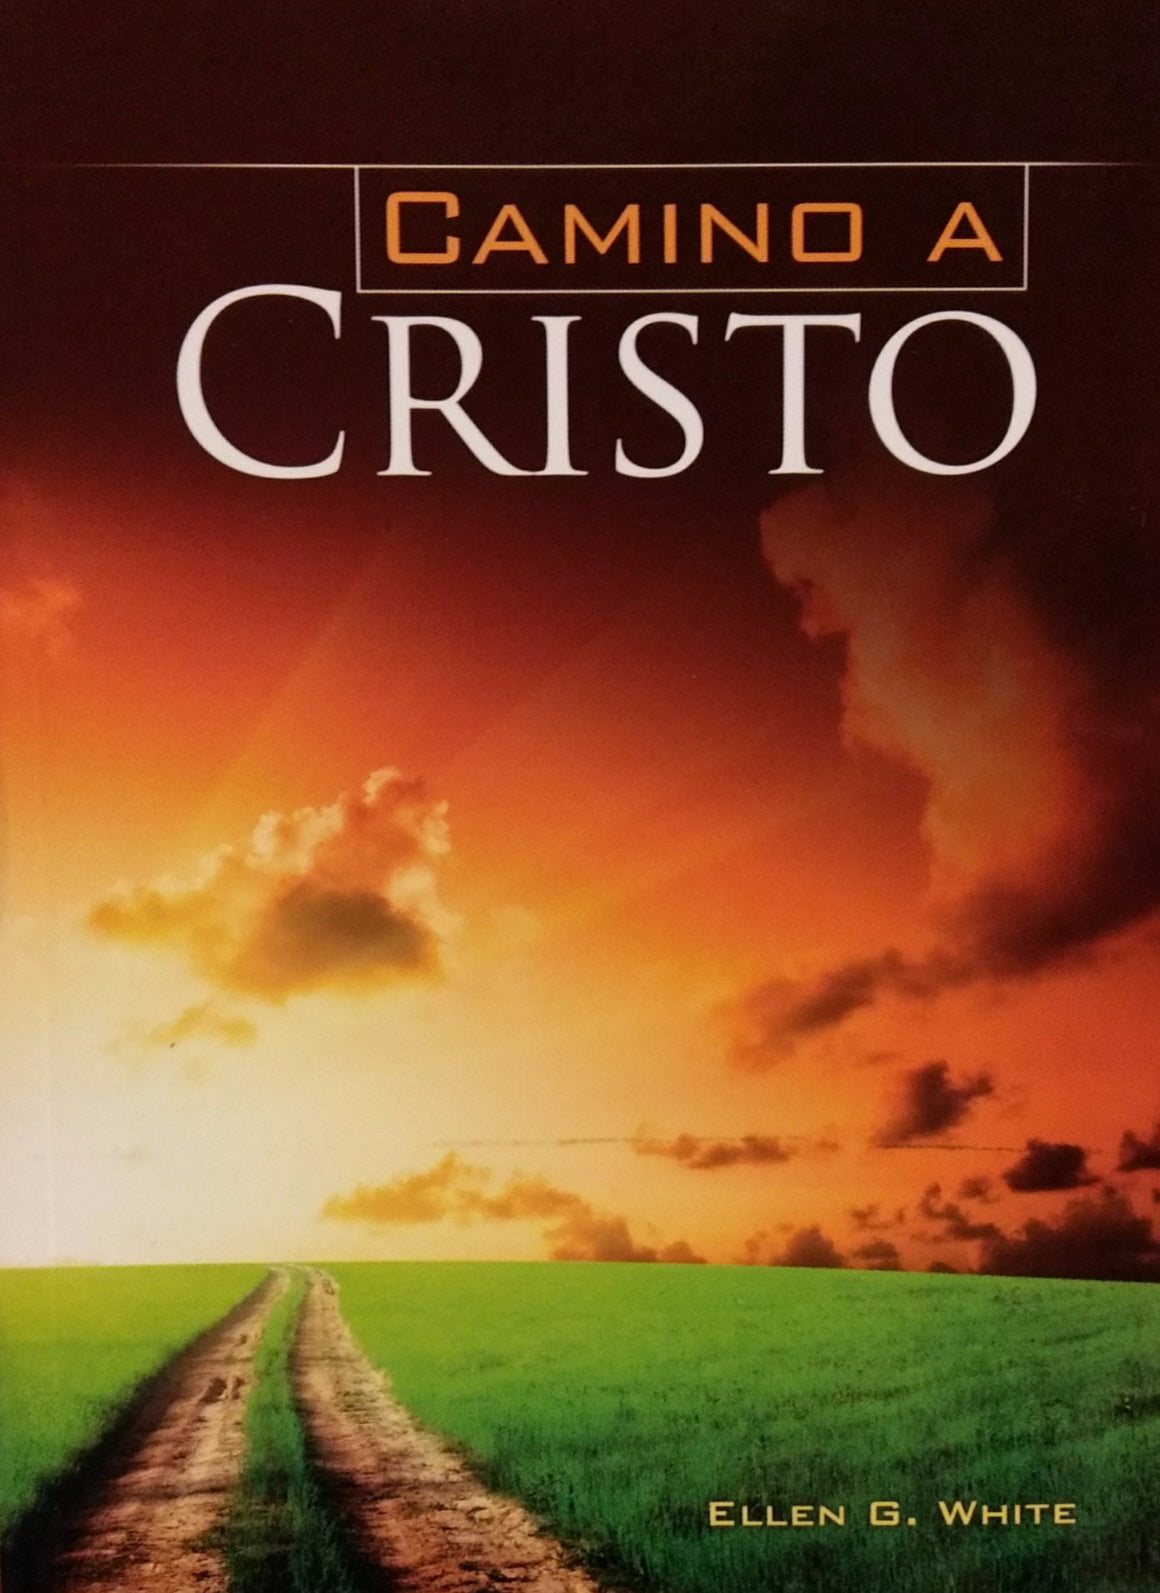 Camino a Cristo, Ilustrado (Illustrated Steps to Christ)